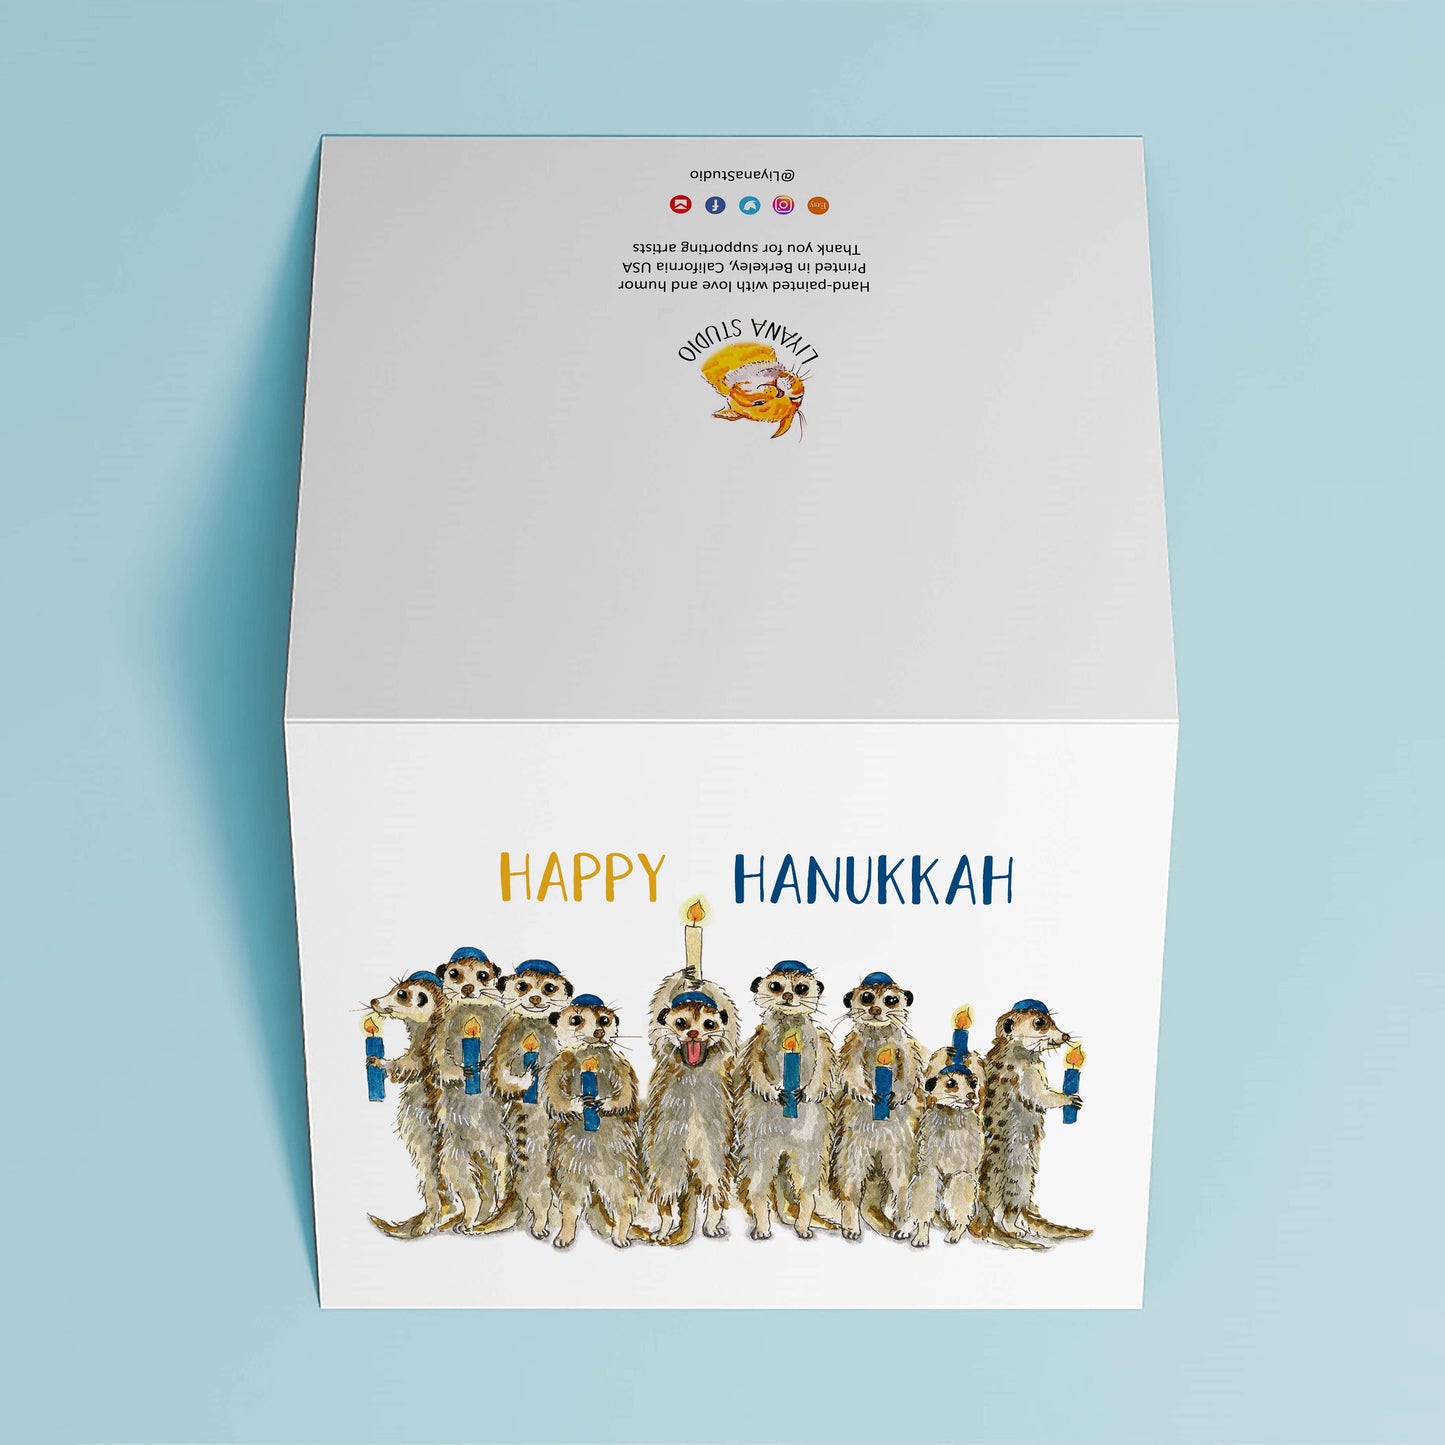 Funny Meerkats Hanukkah Card - Jewish Holiday Gift